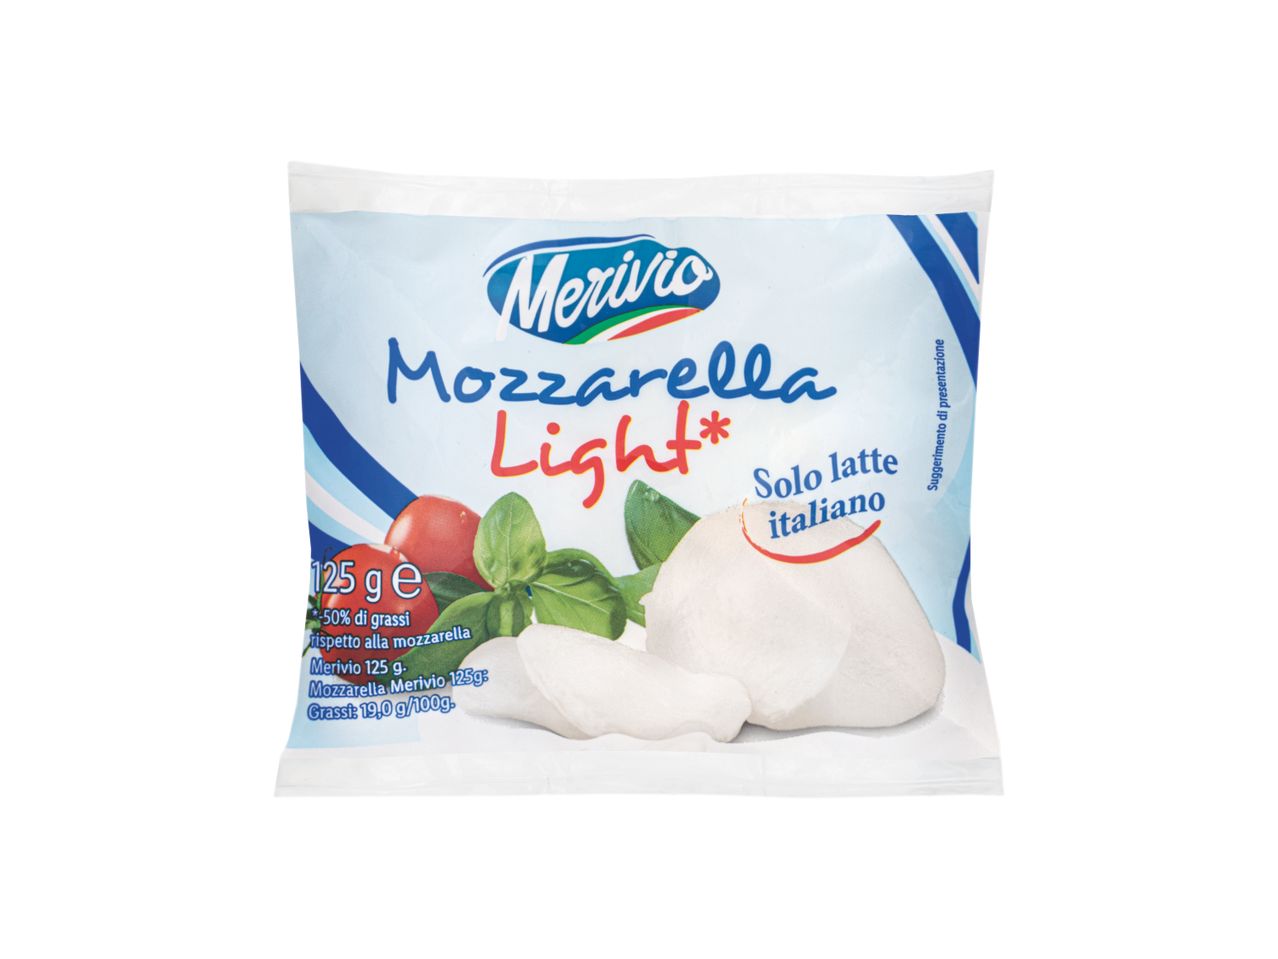 Go to full screen view: Mozzarella Light - Image 1